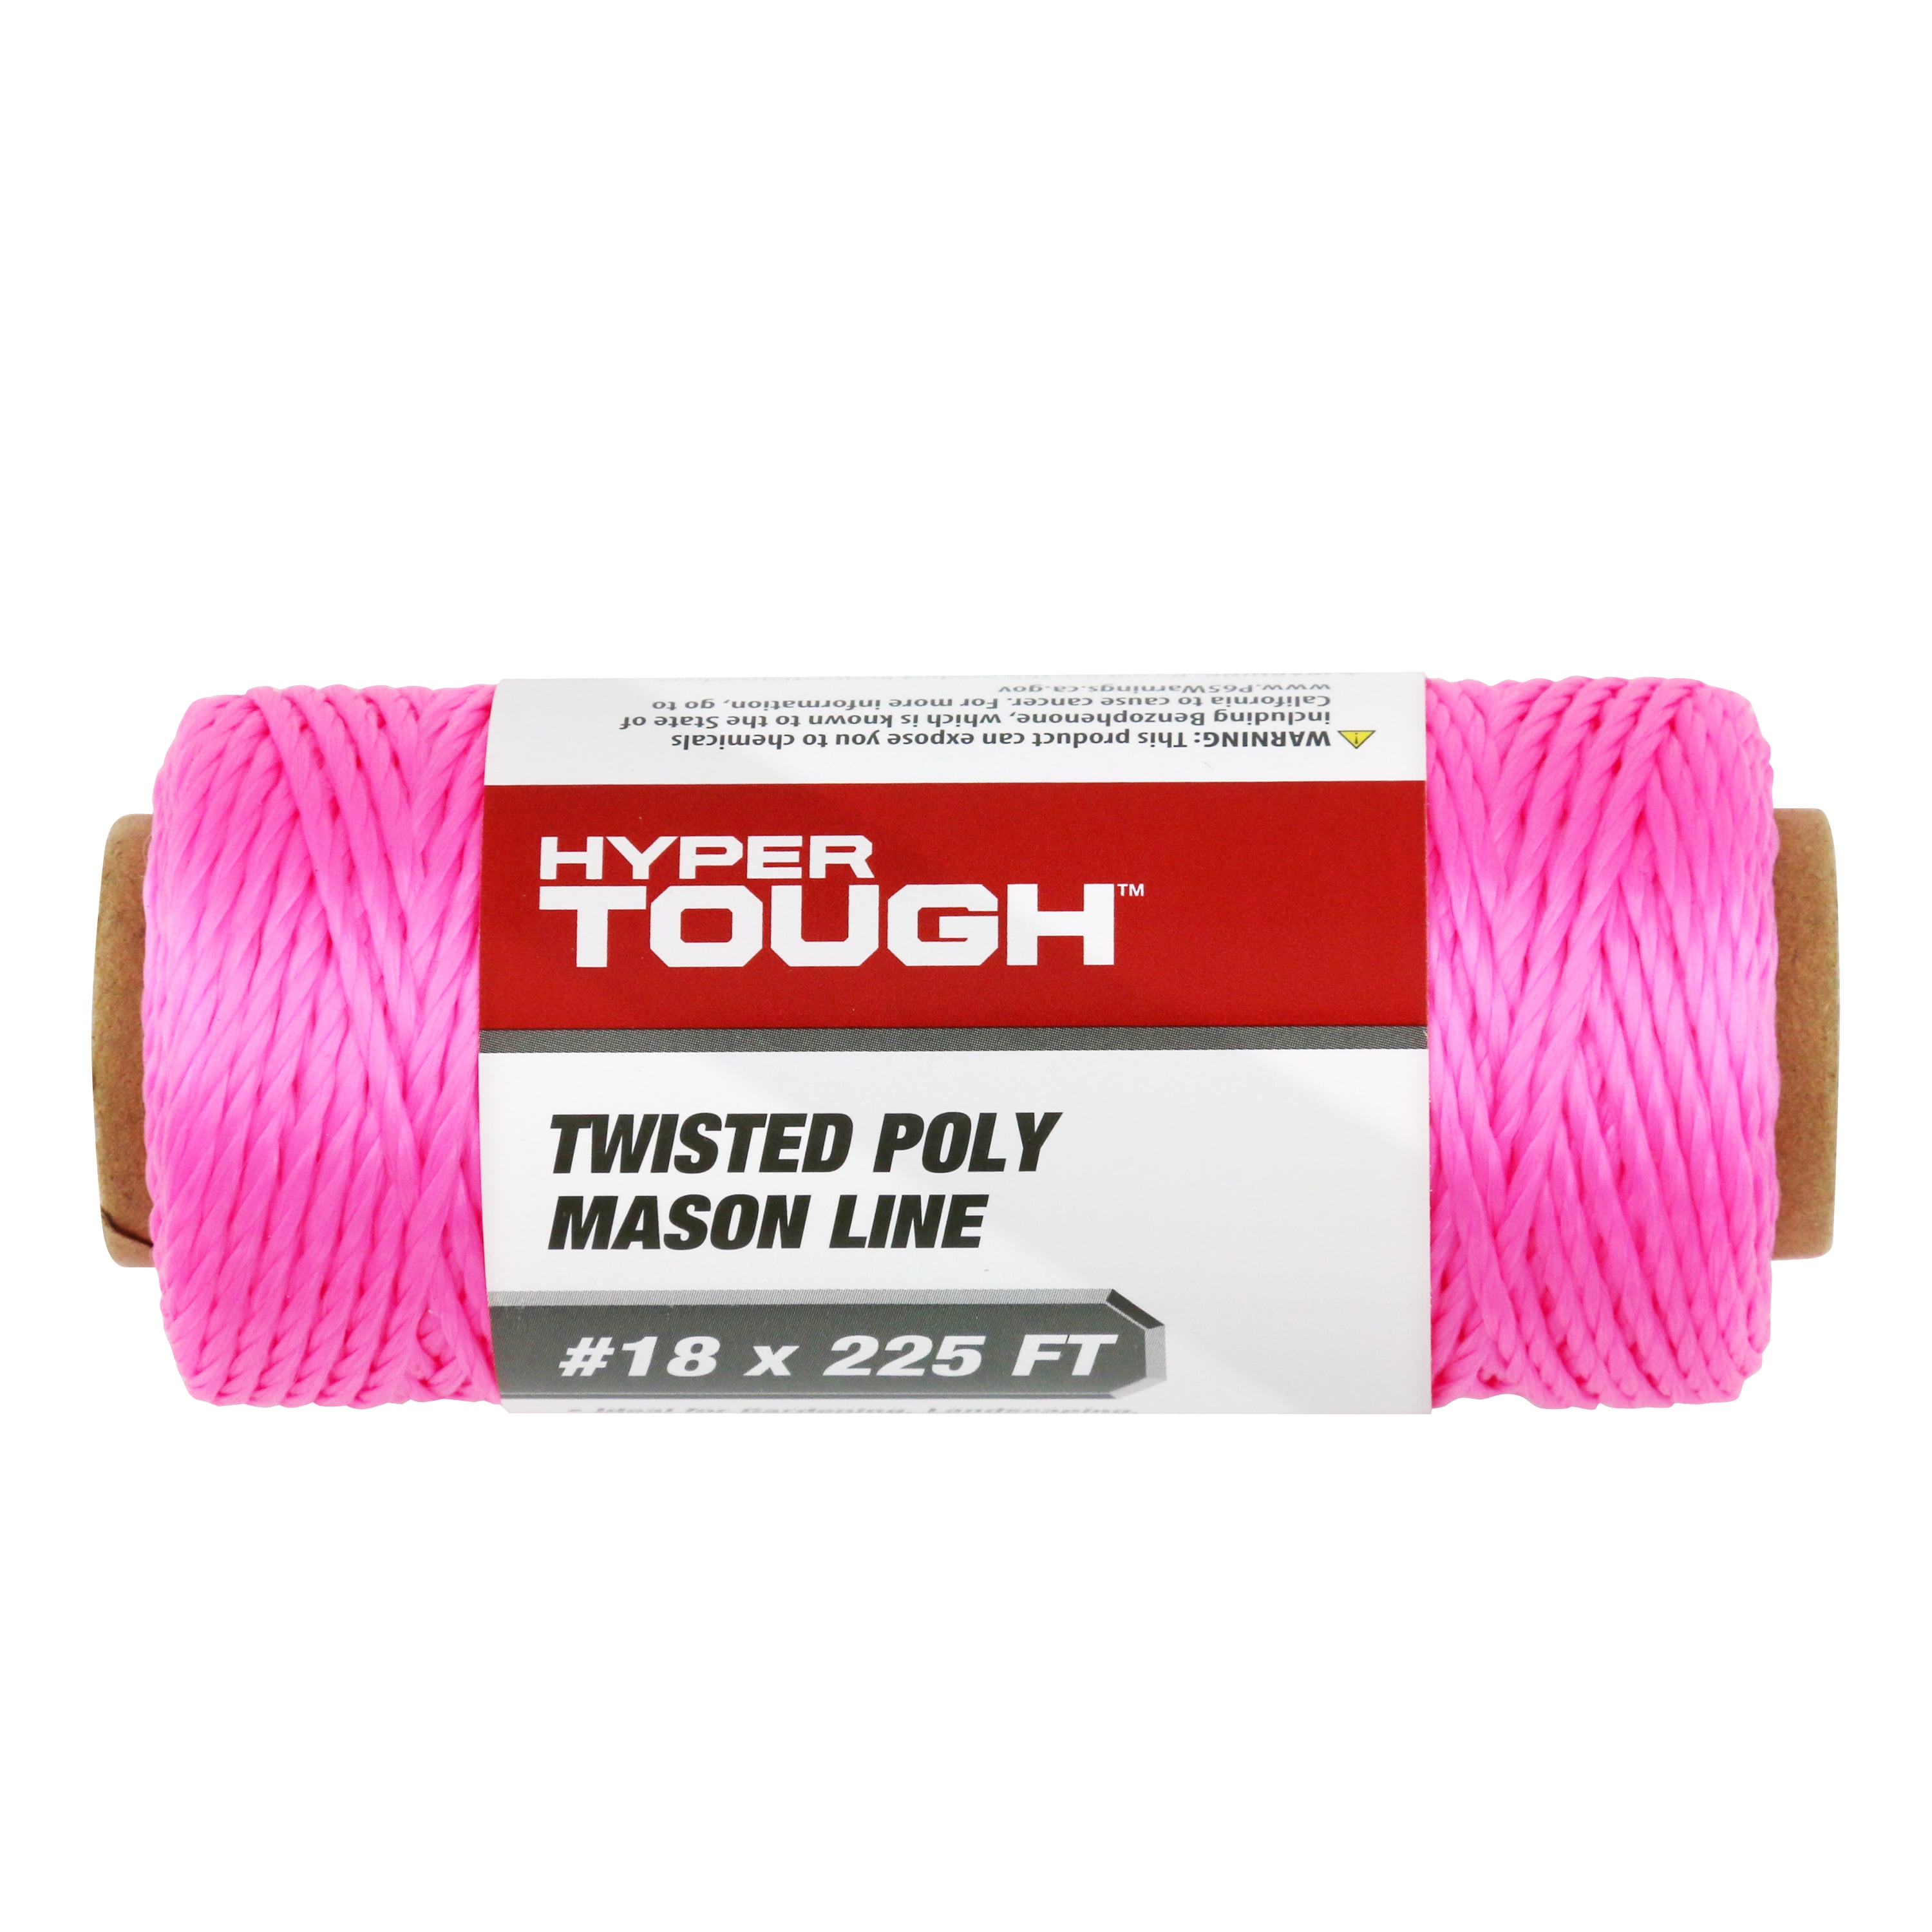 TALATools Braided Mason's Line Pink 106m (350ft)